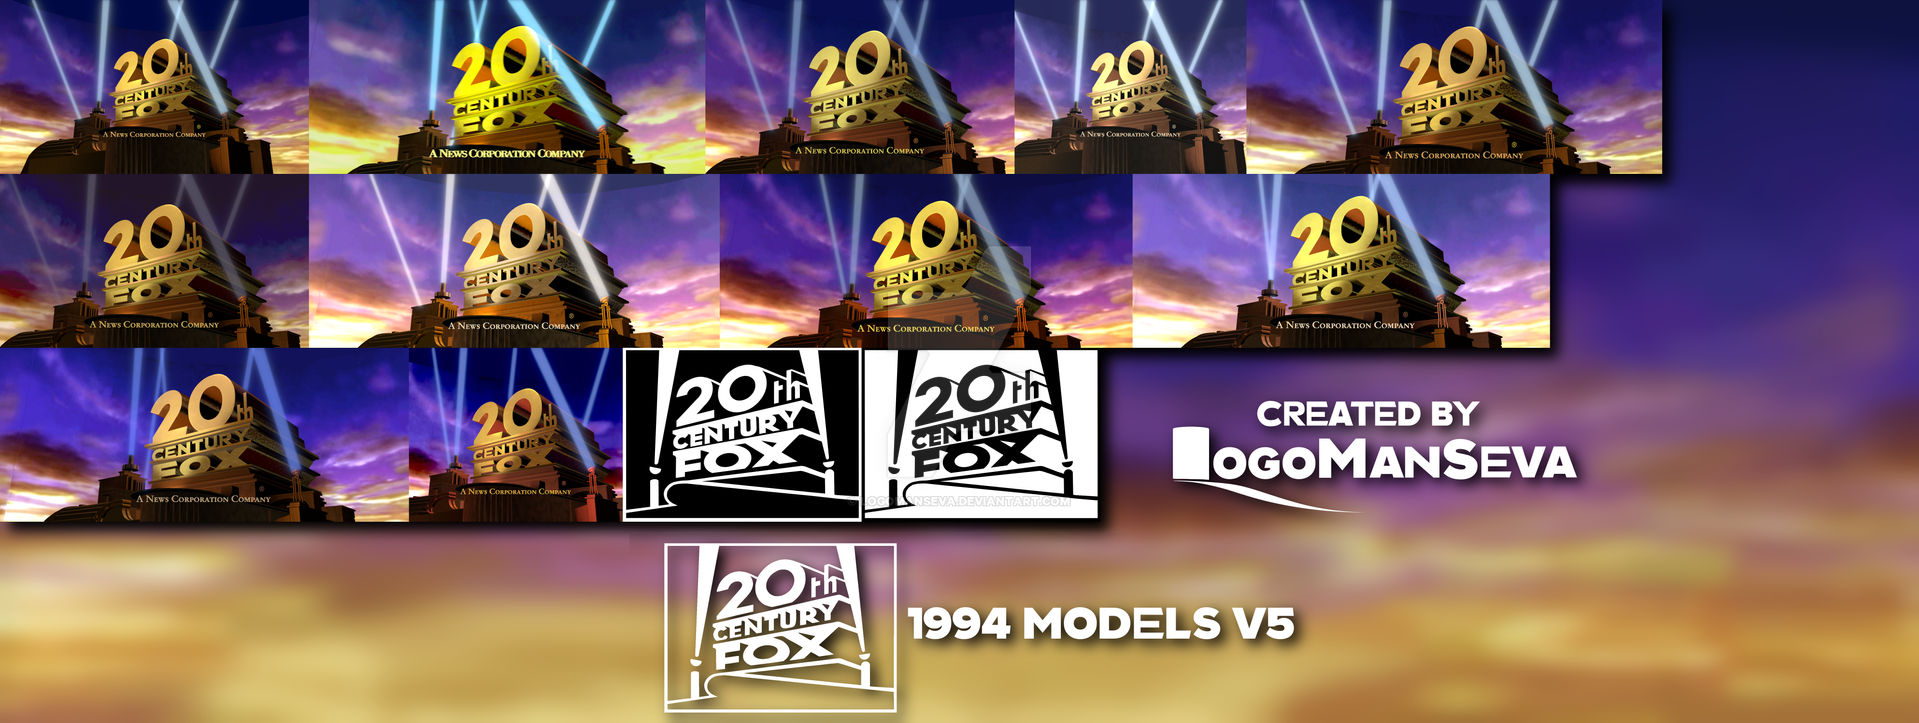 20th Century Fox 1994 Logo (For LogoManSeva) by Isaiav354 on